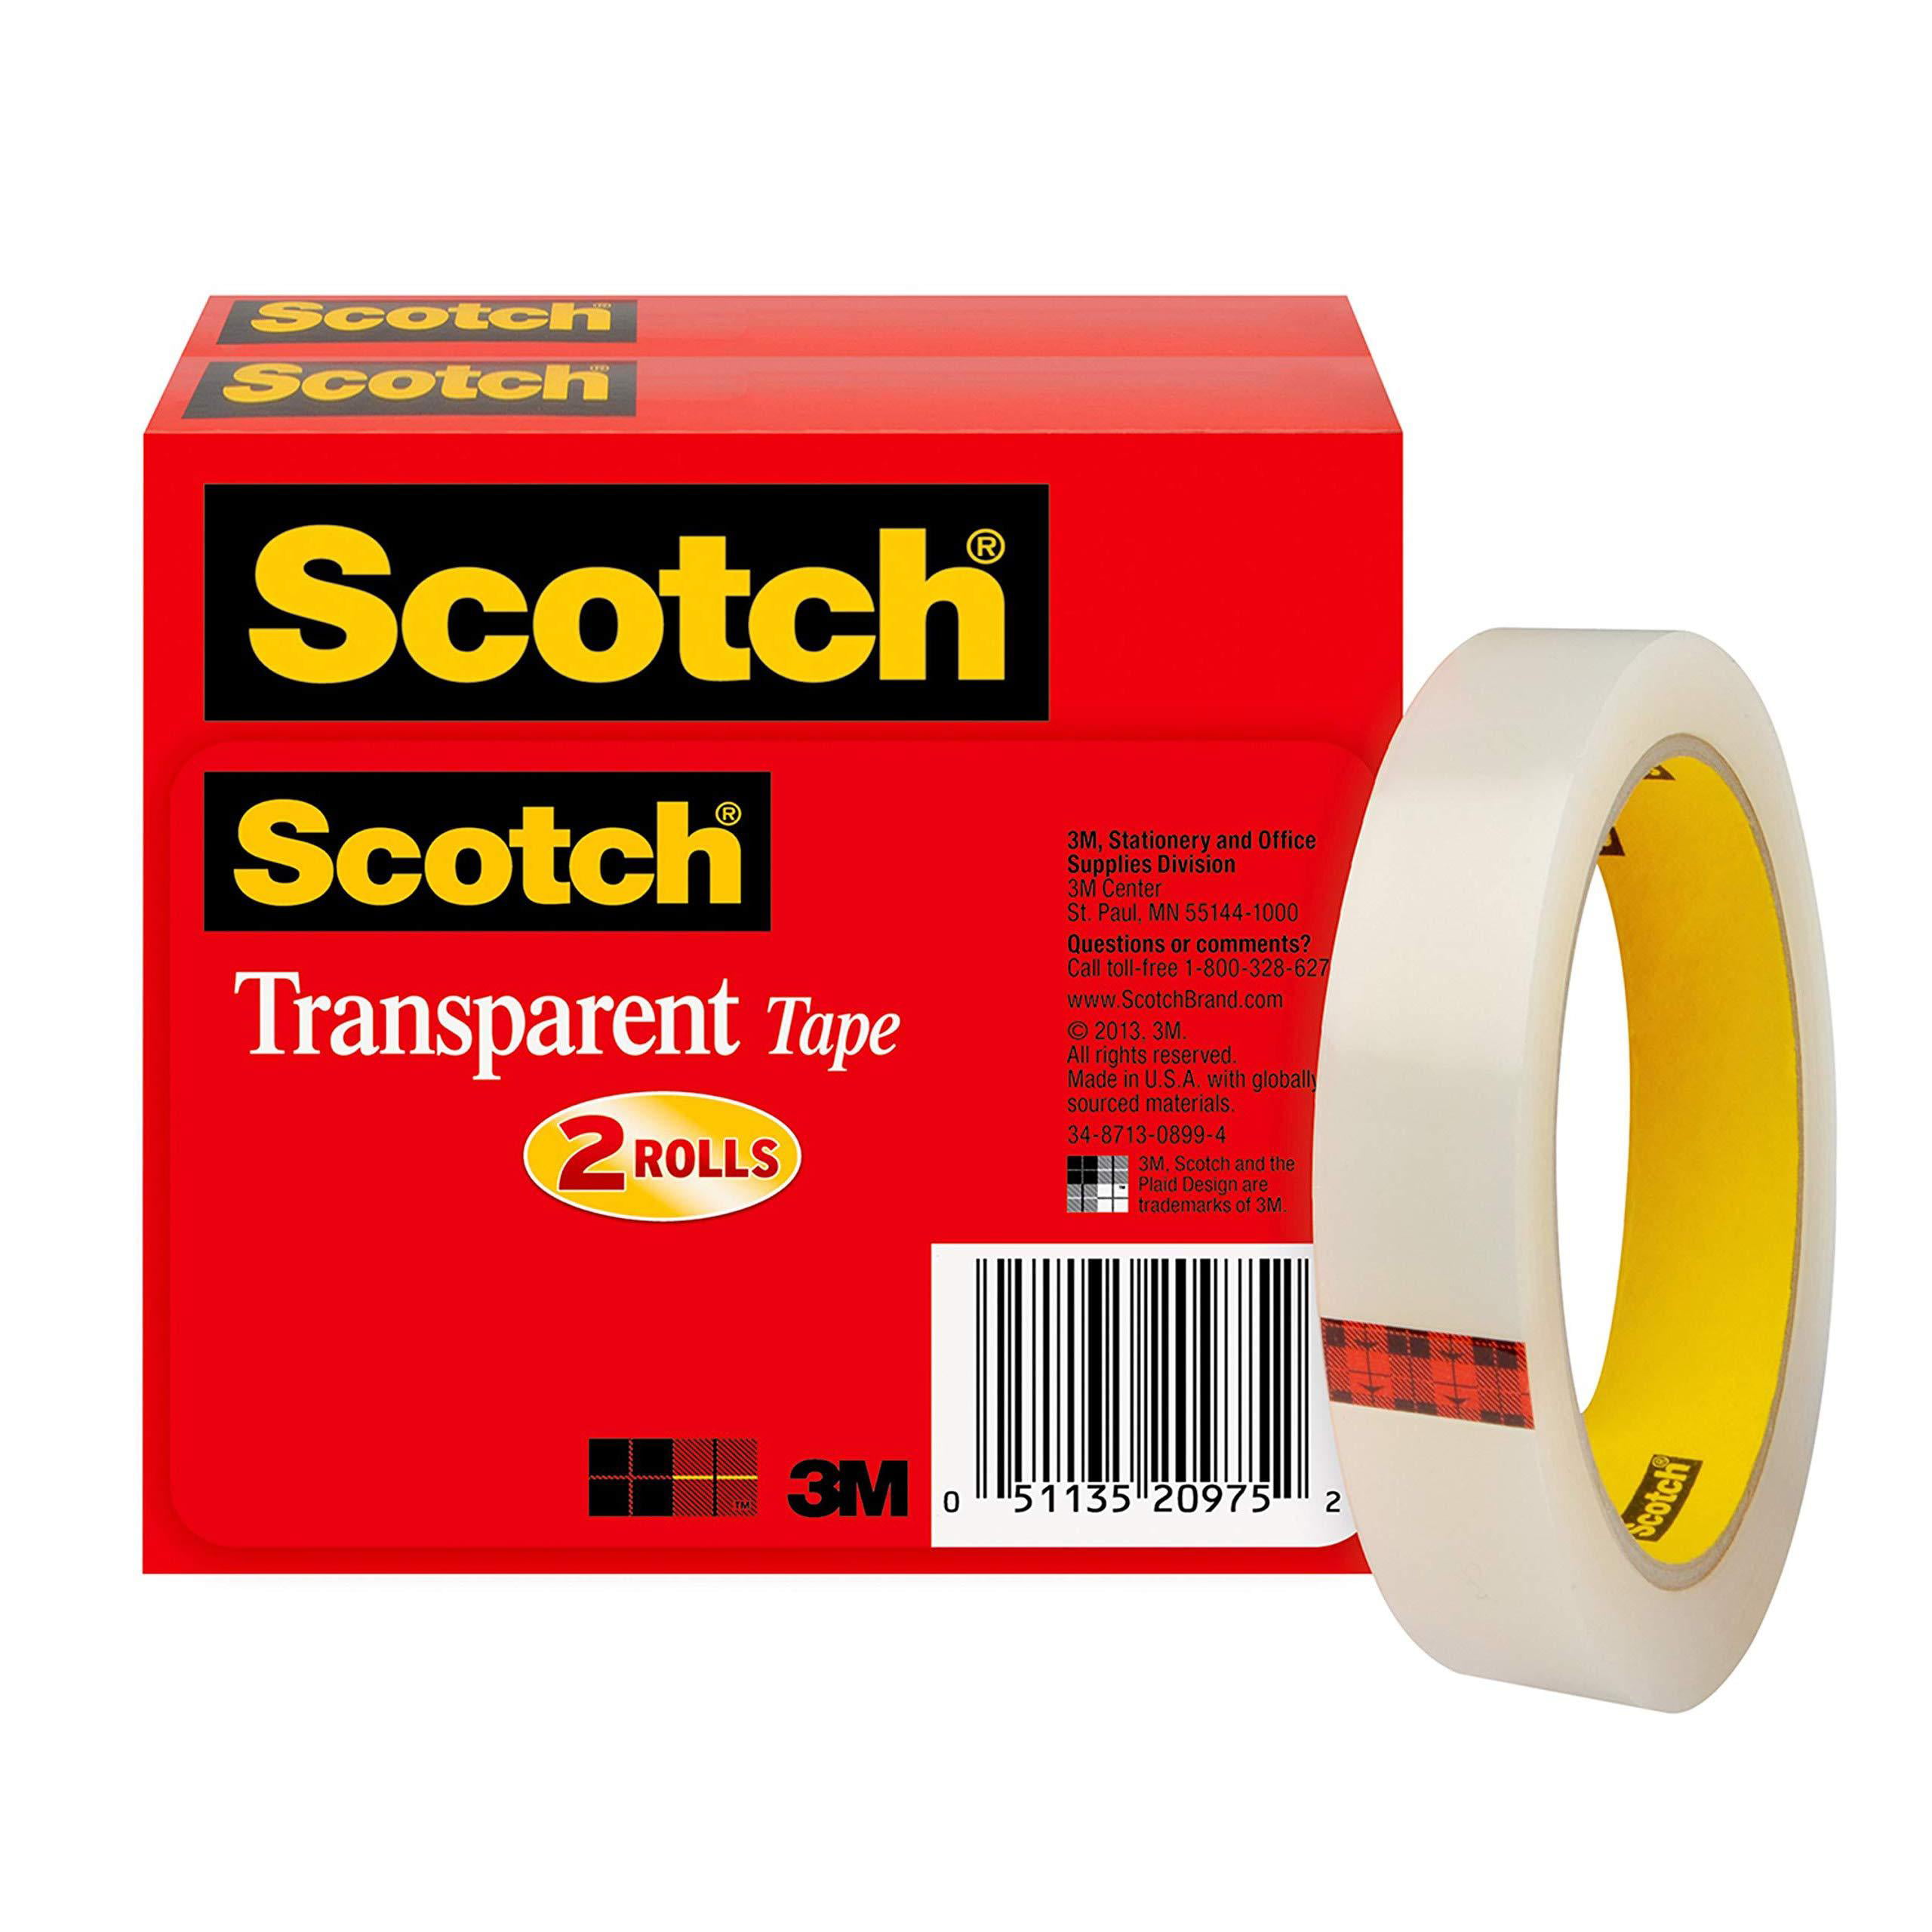      "" 35 PACK "" 70 ROLLS 2157SS Scotch Transparent Tape 3/4" x 250" 2 Rolls 